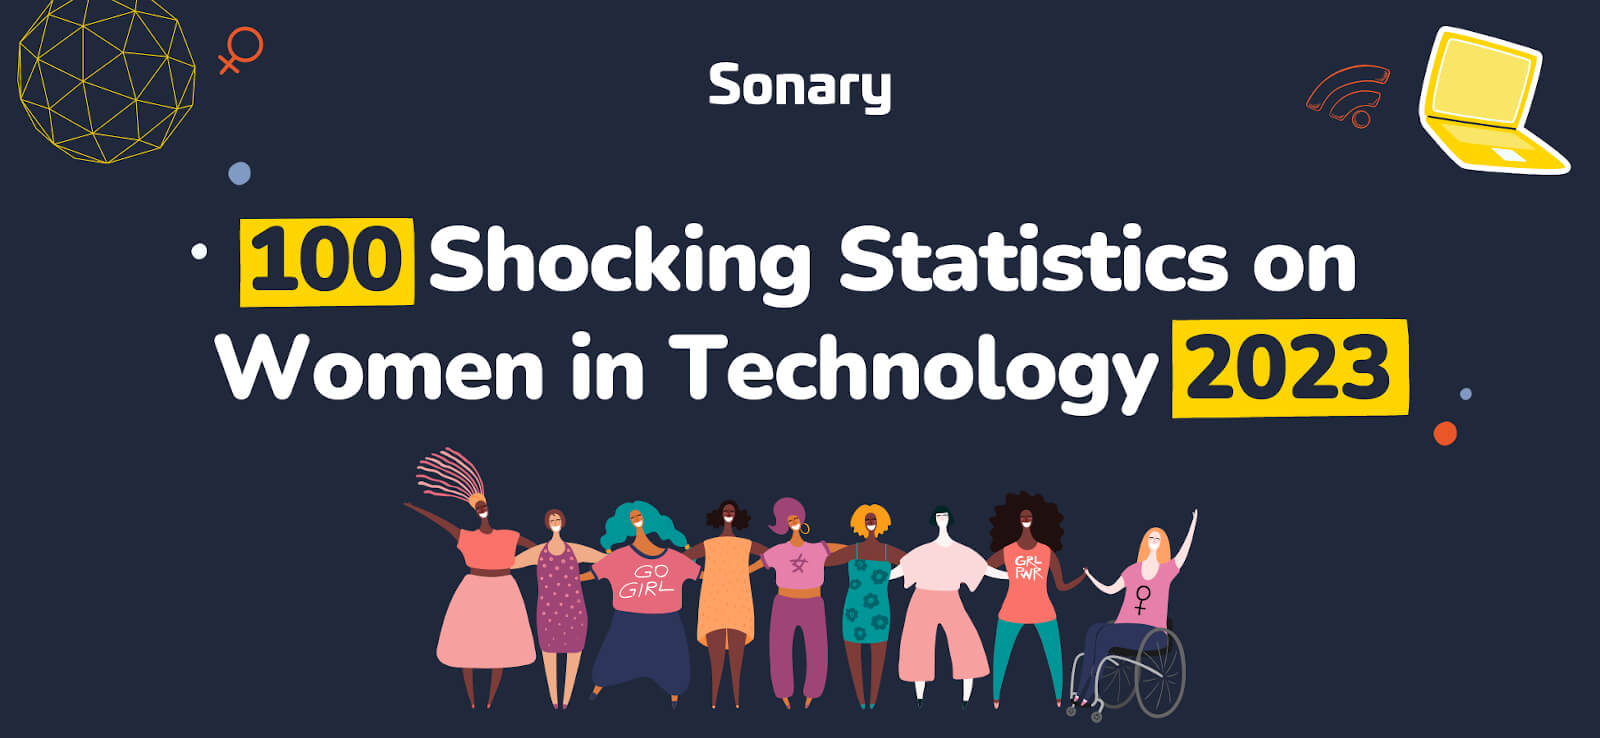 100 Shocking Statistics on Women in Technology (2023)